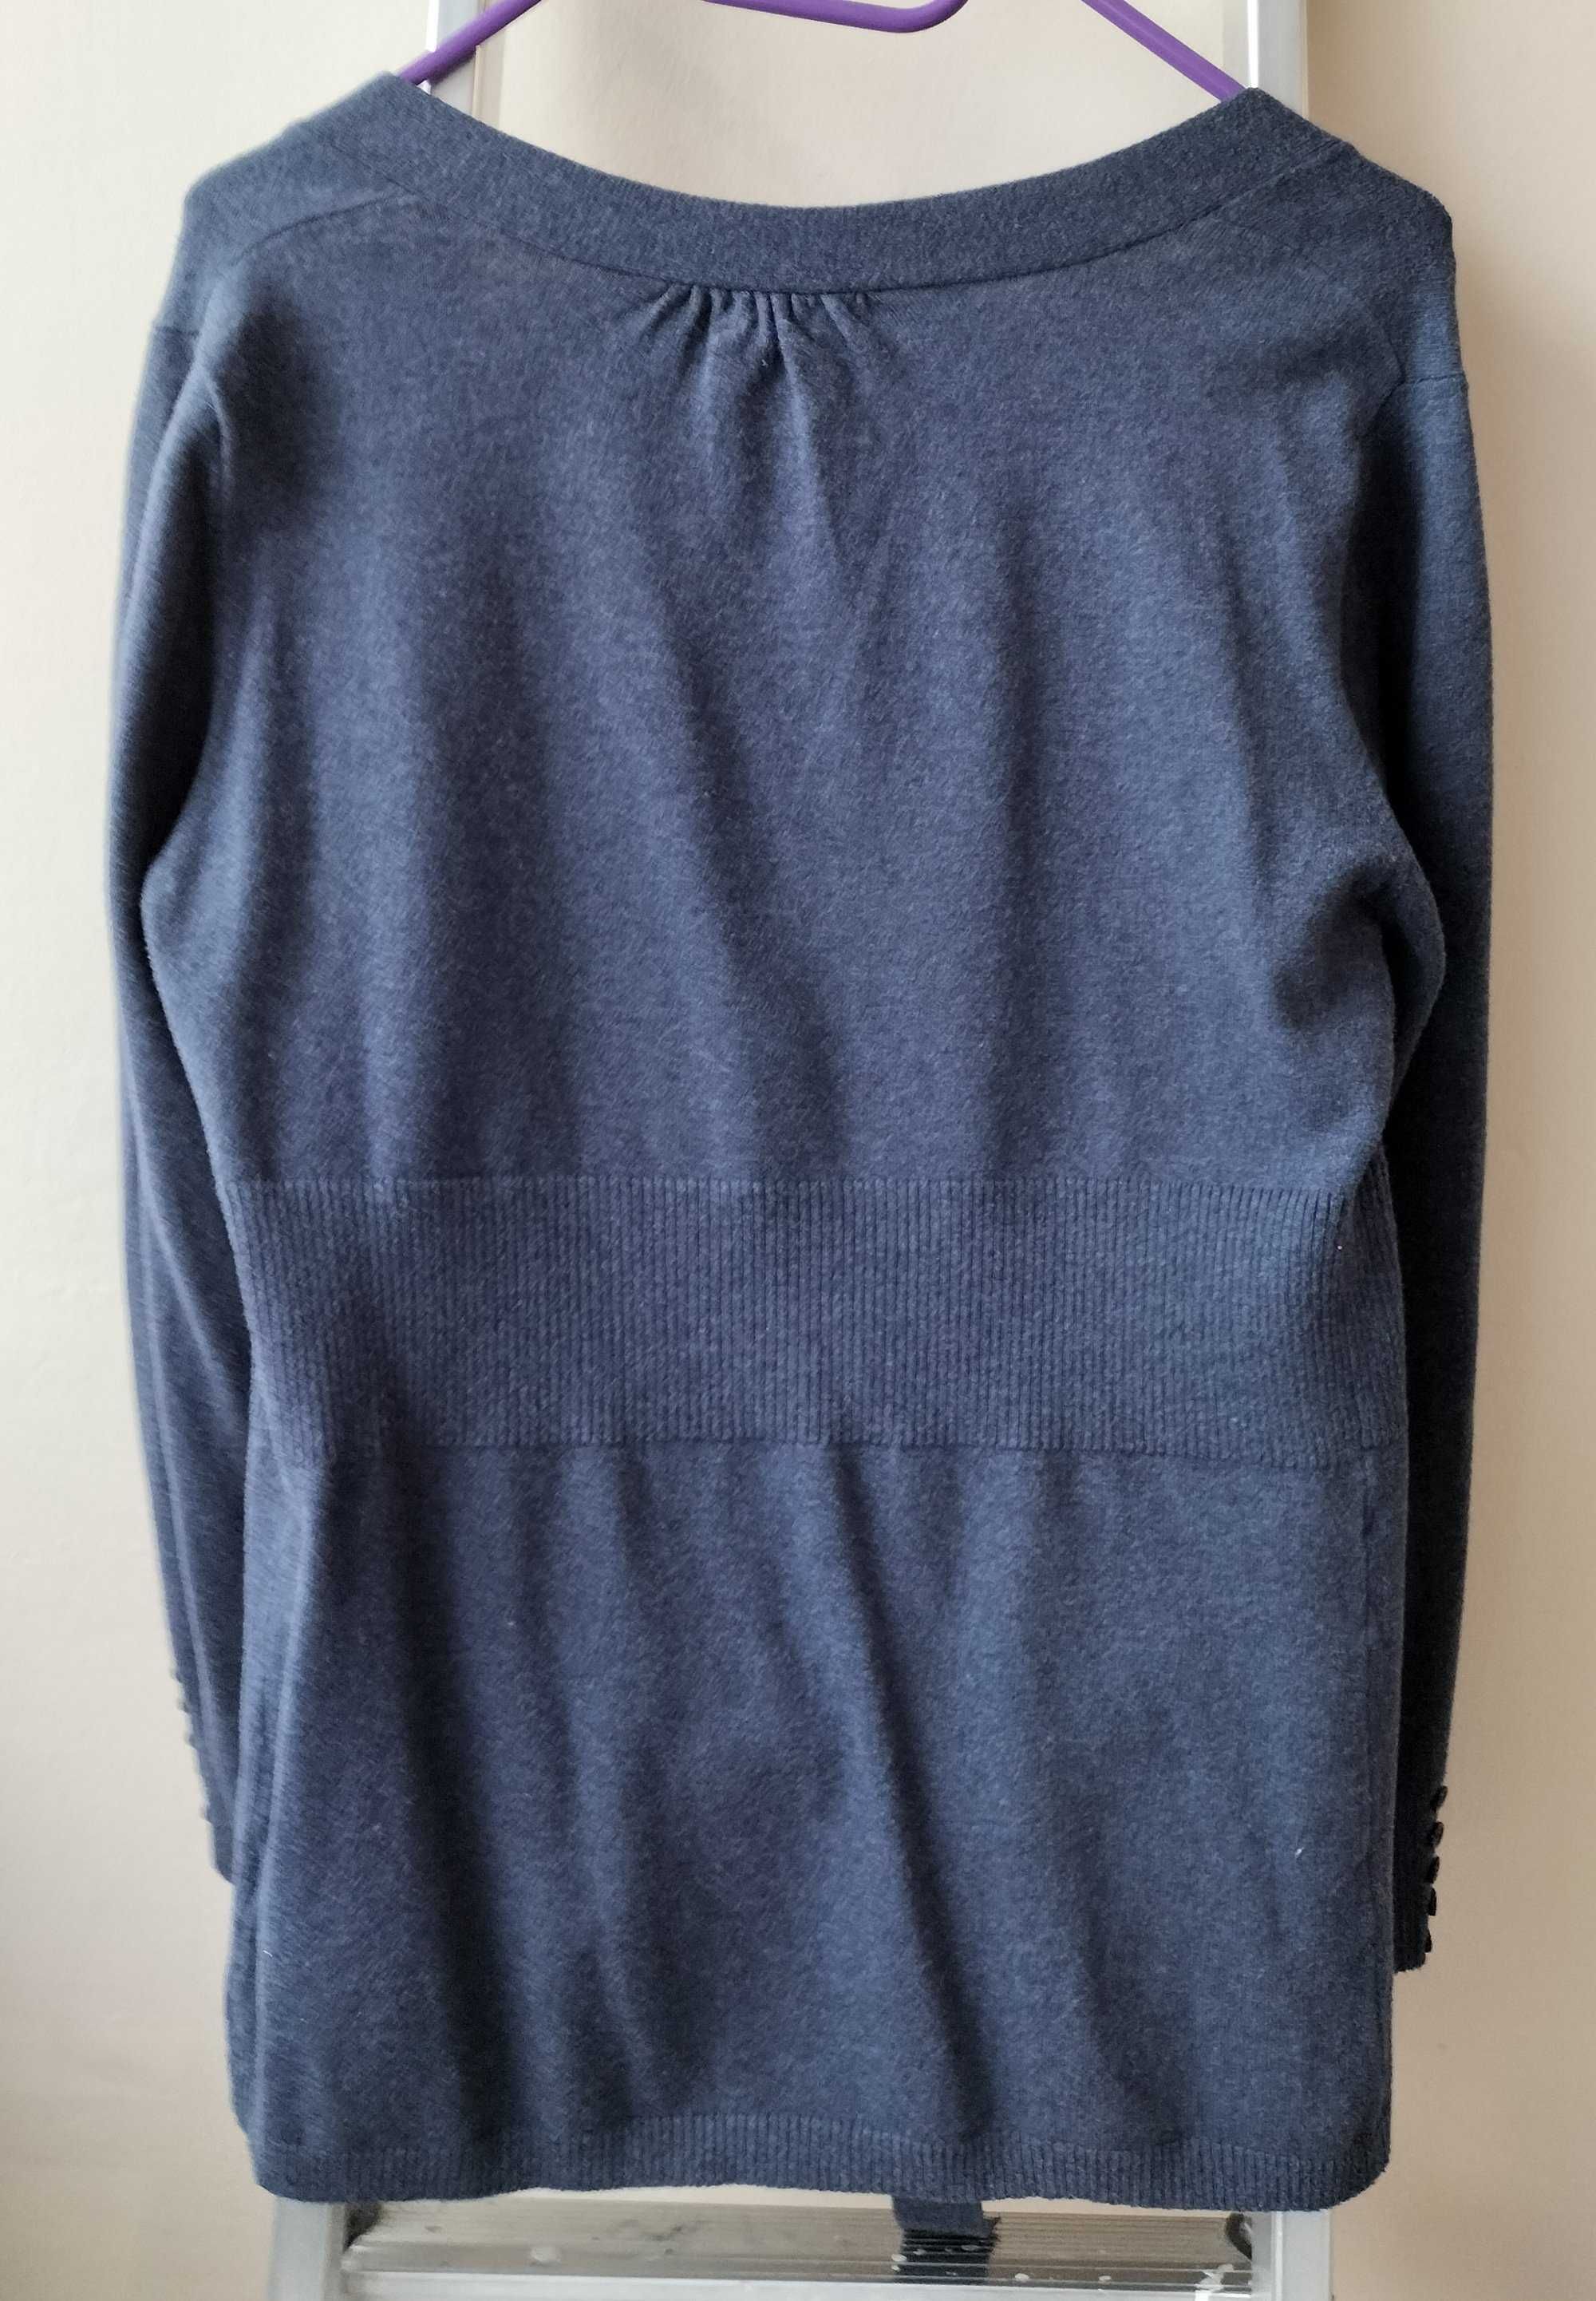 Sweter, sweterek granatowy rozmiar L/XL